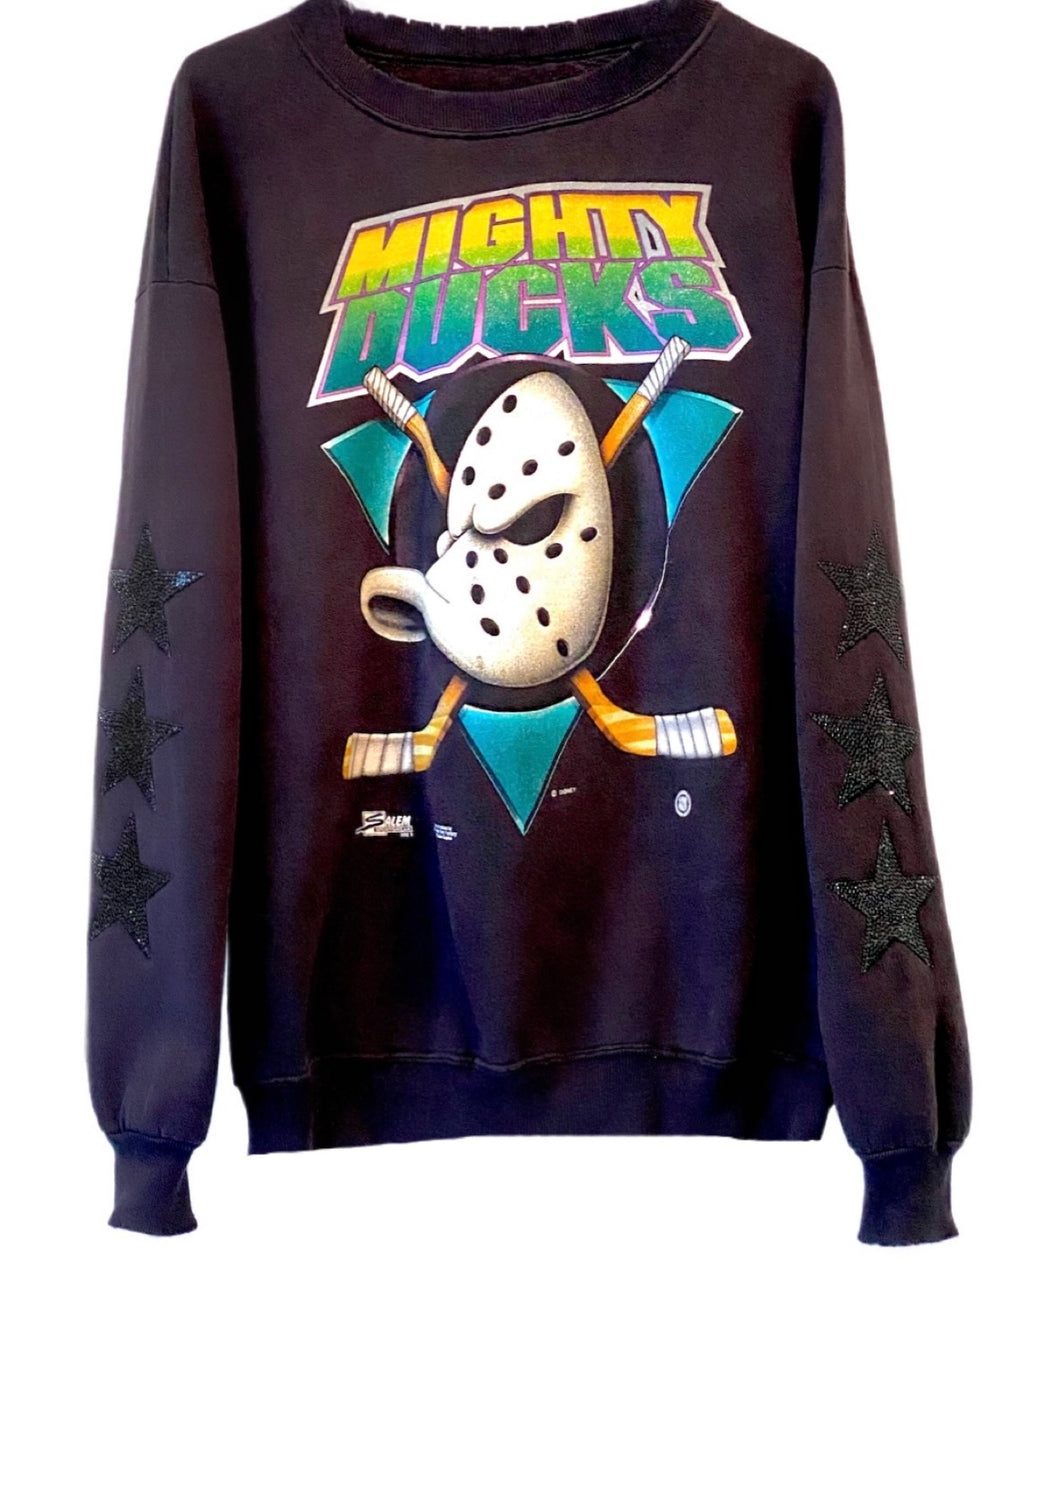 Anaheim Ducks, NHL One of a KIND “Early 90’s” Vintage “Mighty Ducks” Sweatshirt with Three Black Crystal Star Design